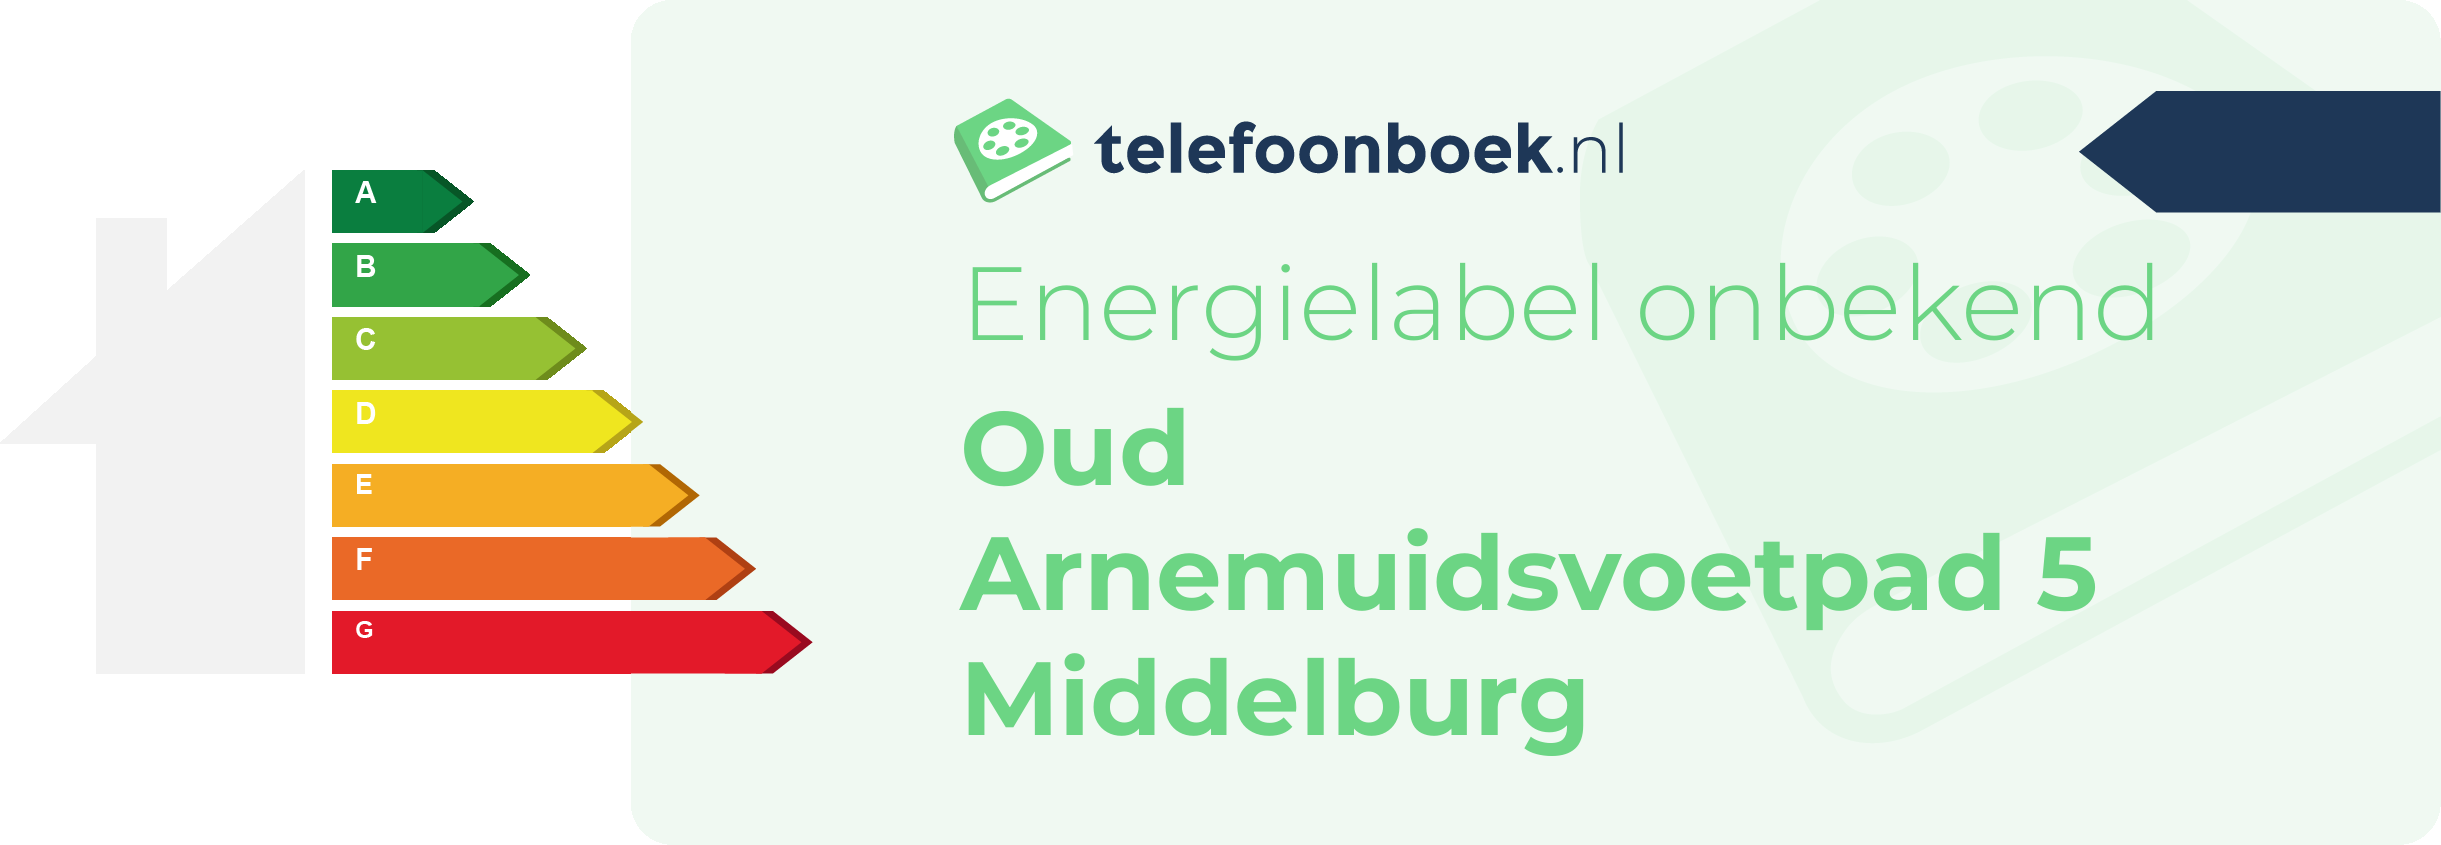 Energielabel Oud Arnemuidsvoetpad 5 Middelburg